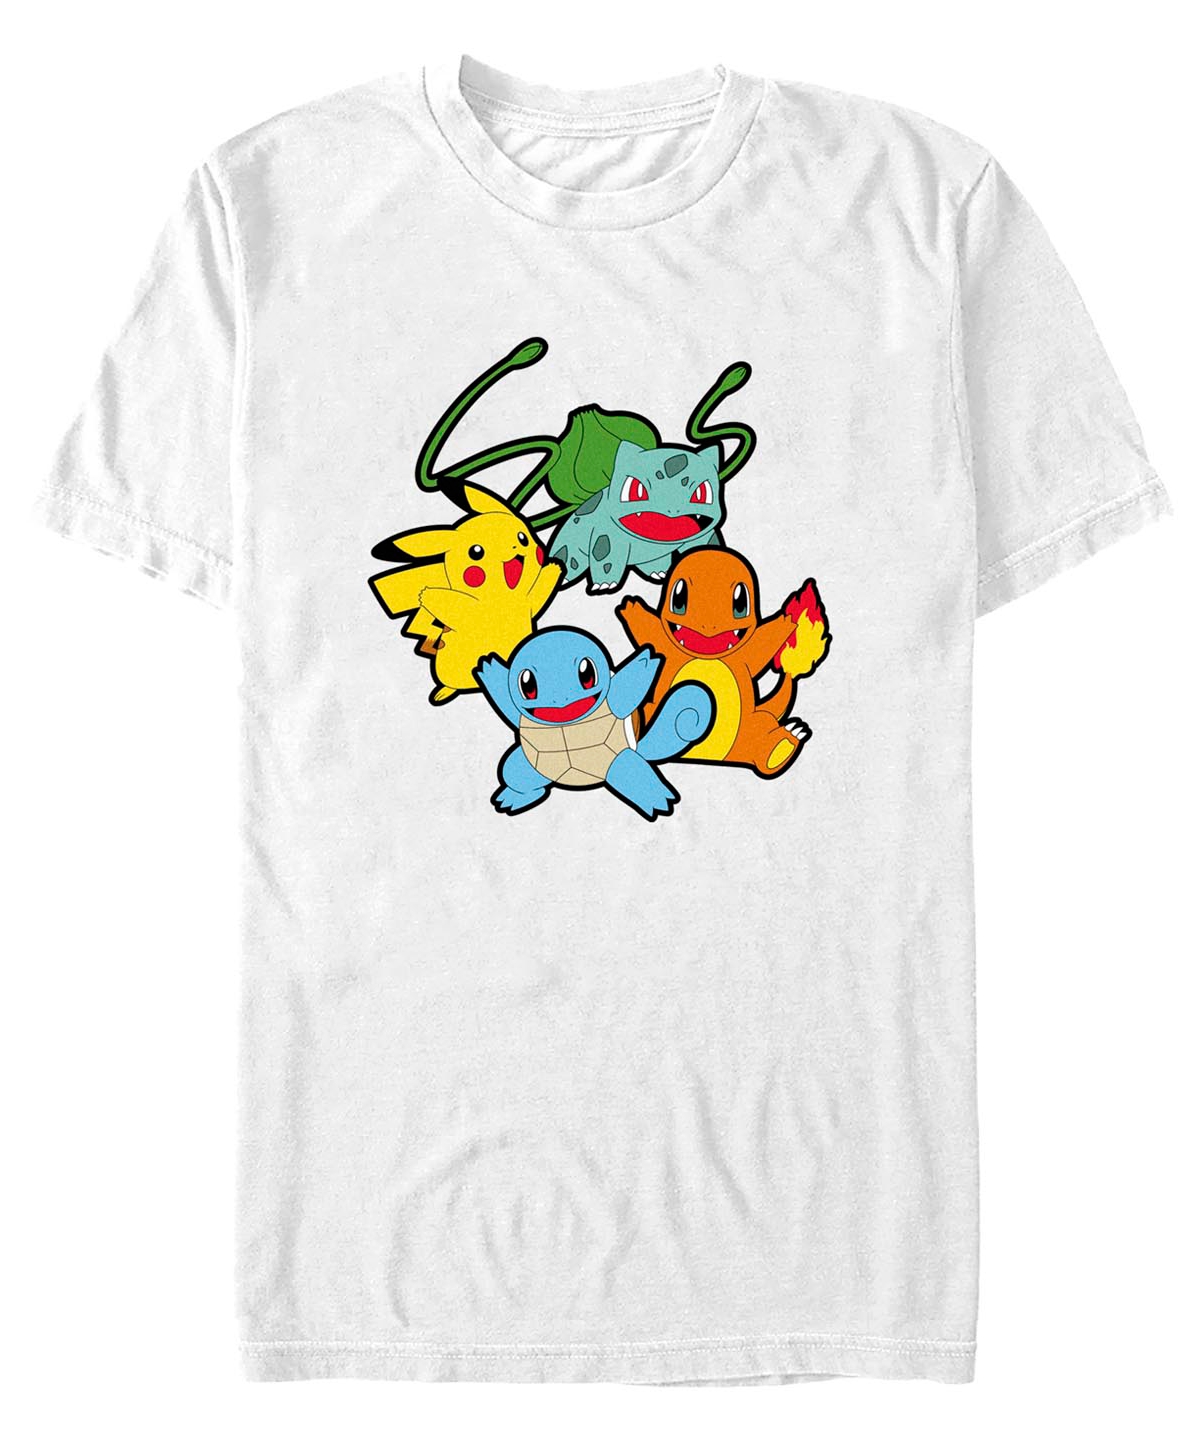 Fifth Sun Men's Classic Pokemon Group Short Sleeve T-shirt In White